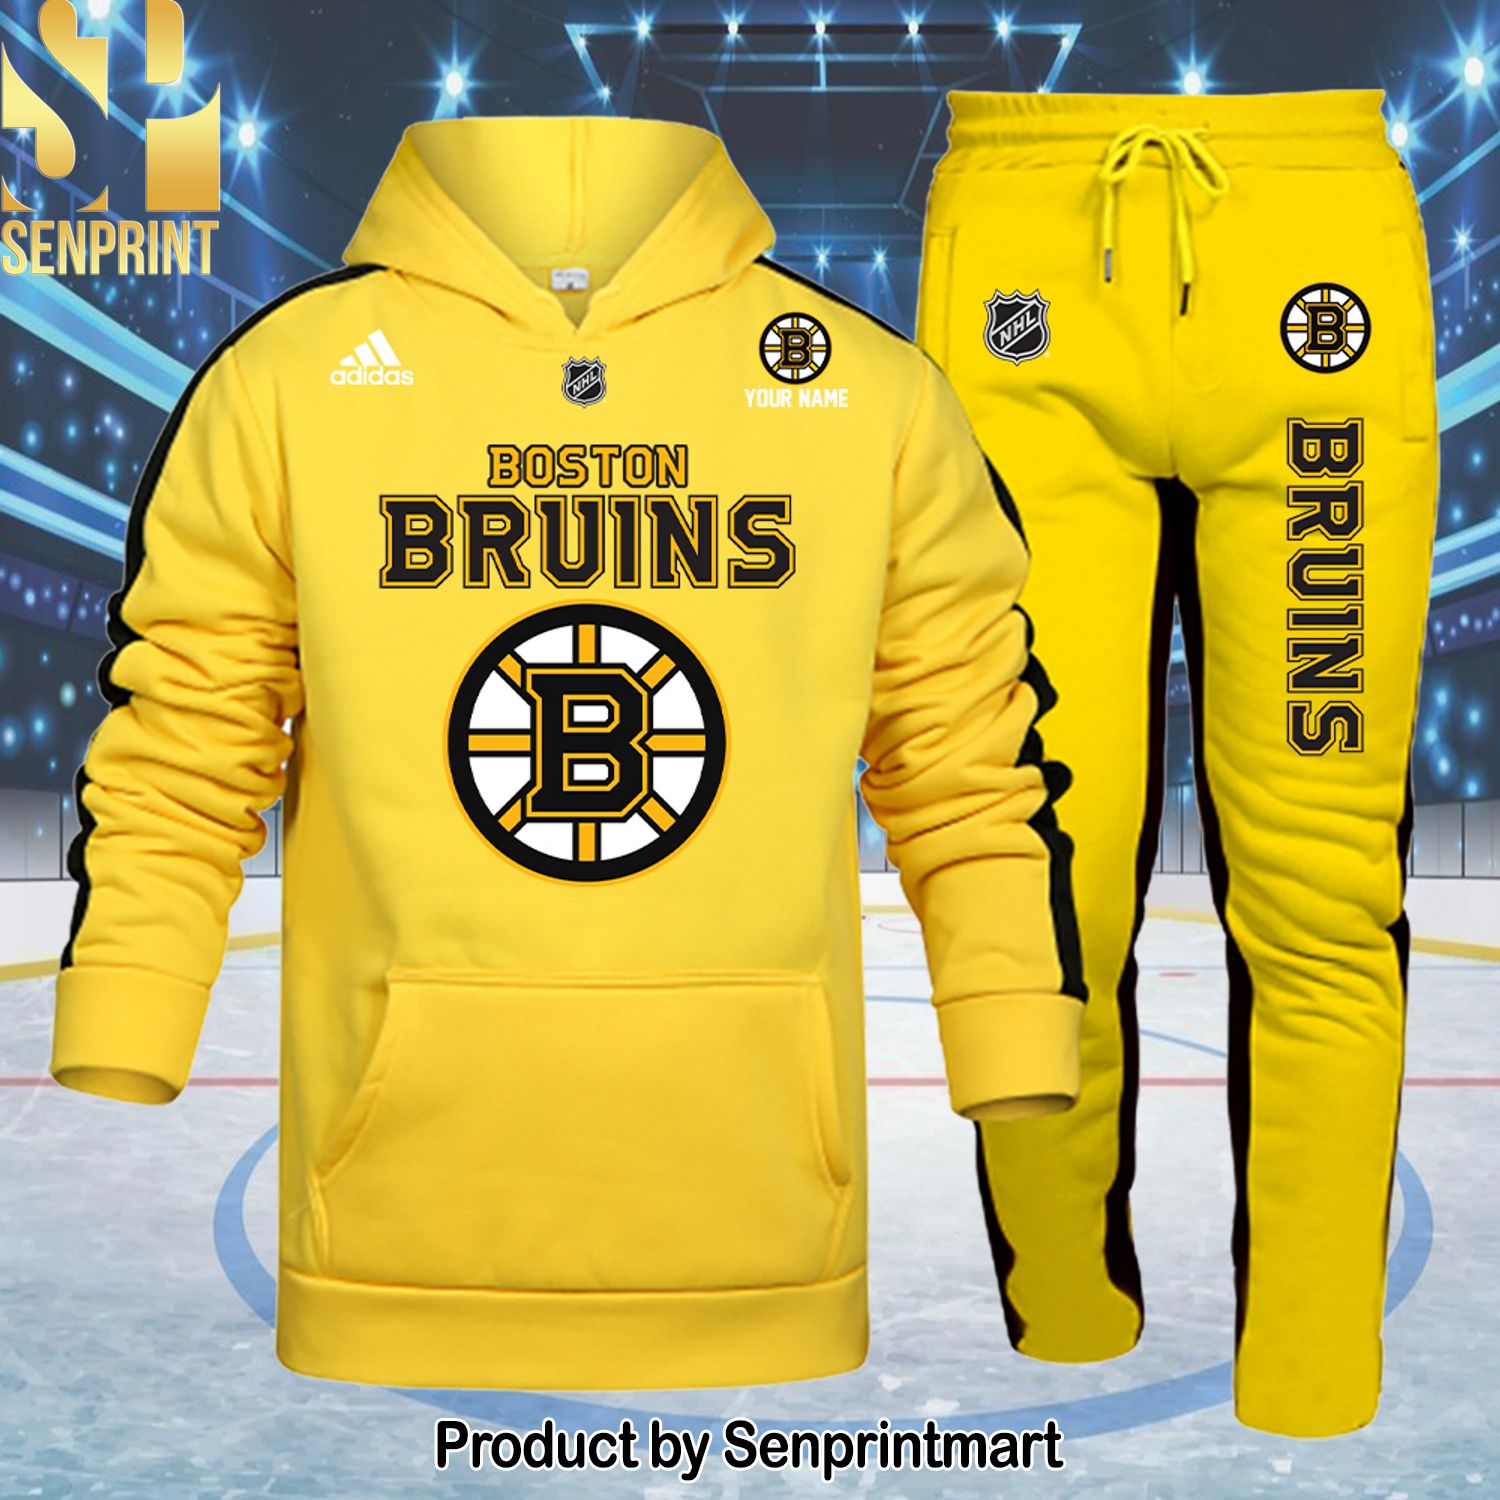 Boston Bruins Hot Outfit Shirt and Pants